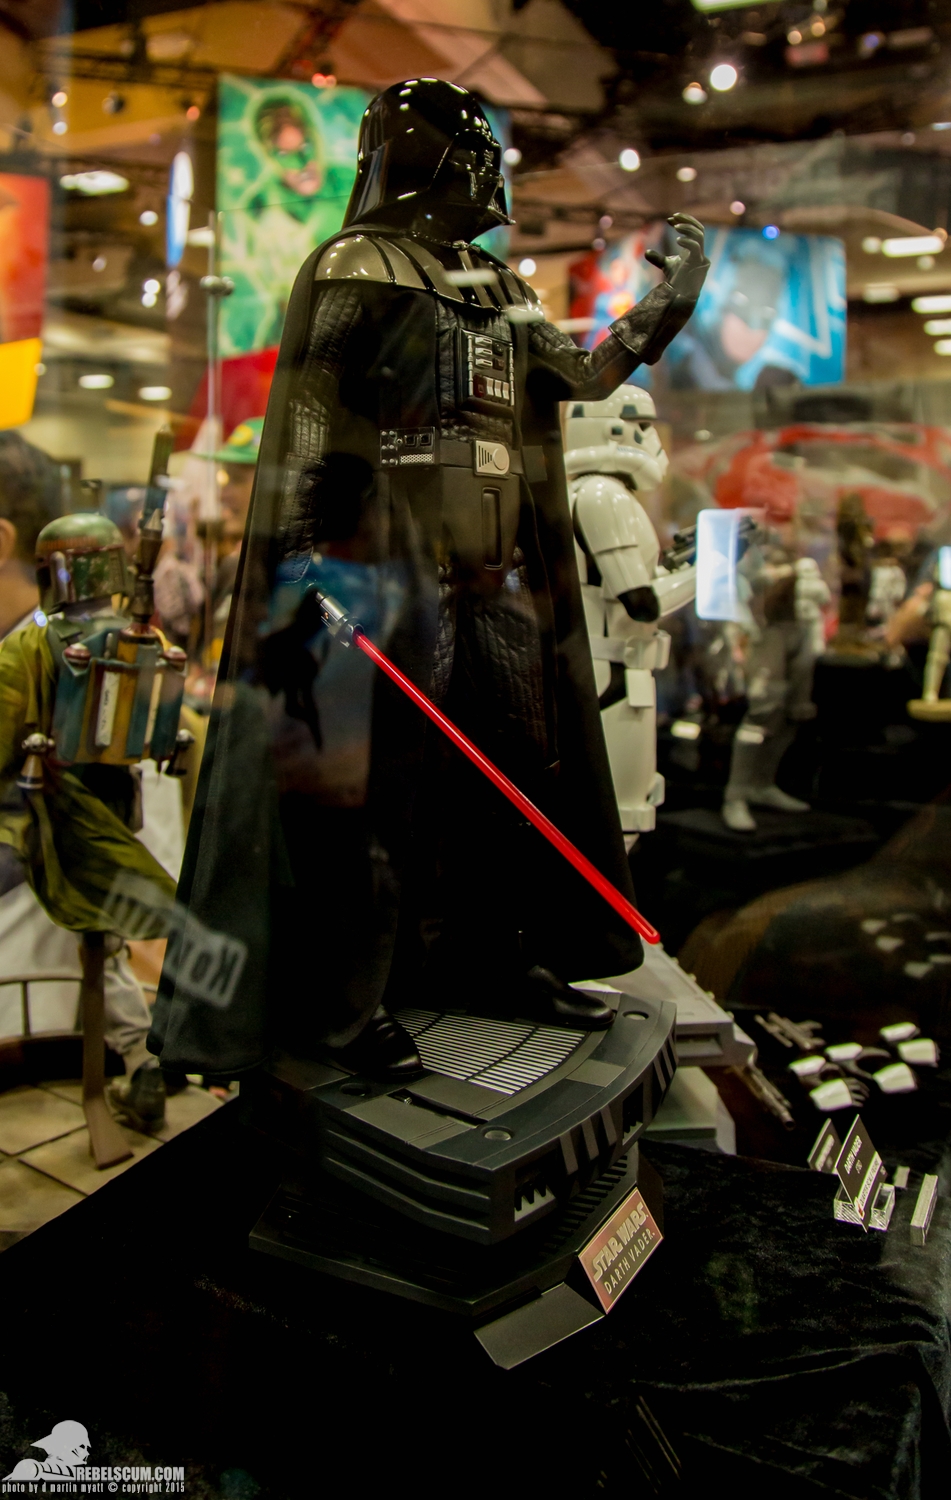 Hot-Toys-Display-2015-San-Diego-Comic-Con-SDCC-067.jpg